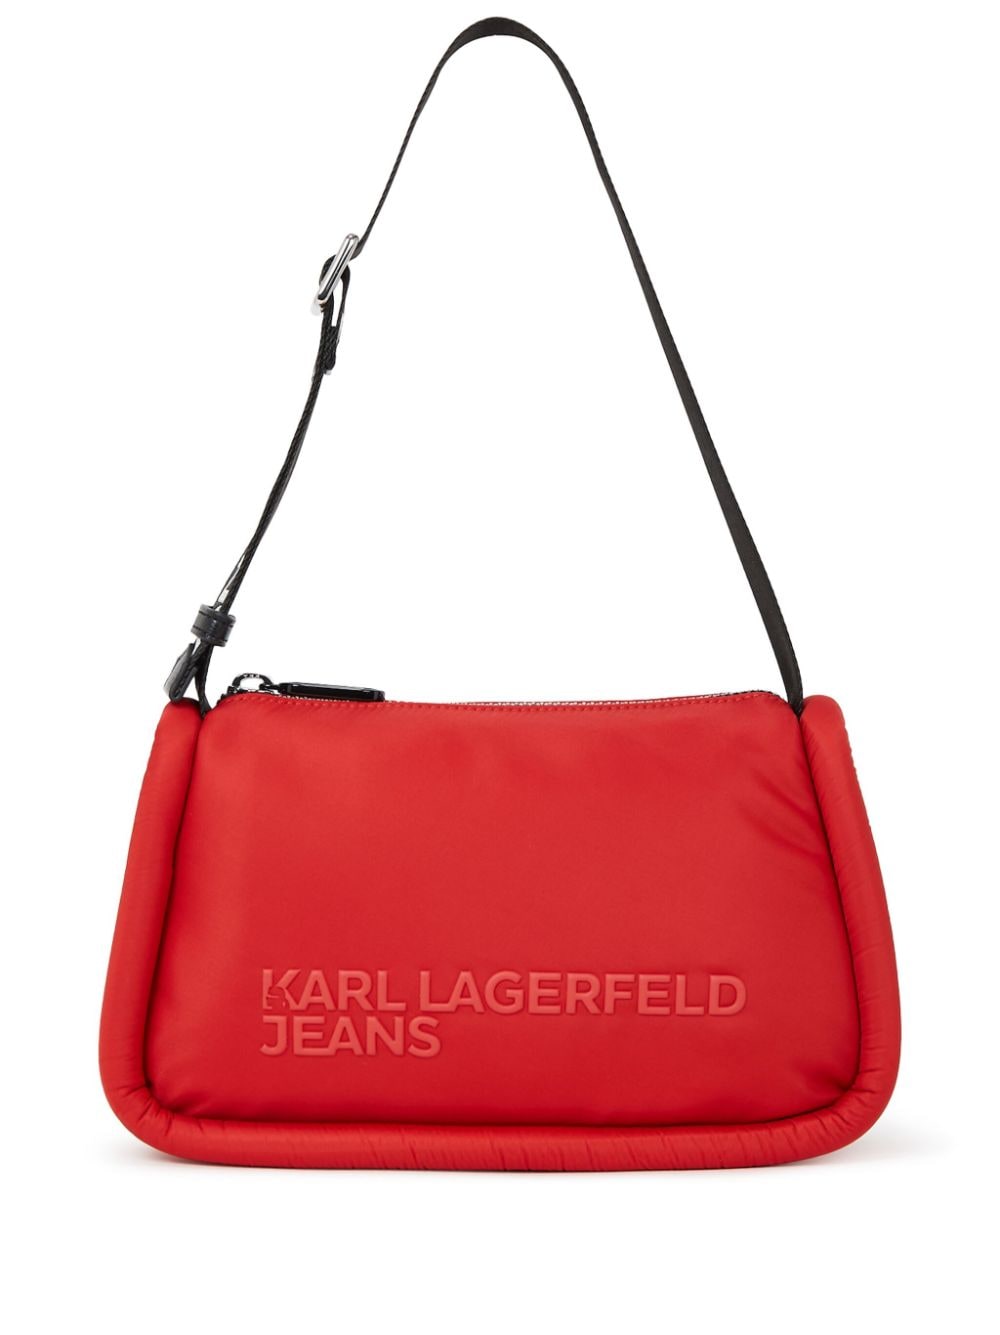 Karl Lagerfeld Jeans puffy shoulder bag - Red von Karl Lagerfeld Jeans